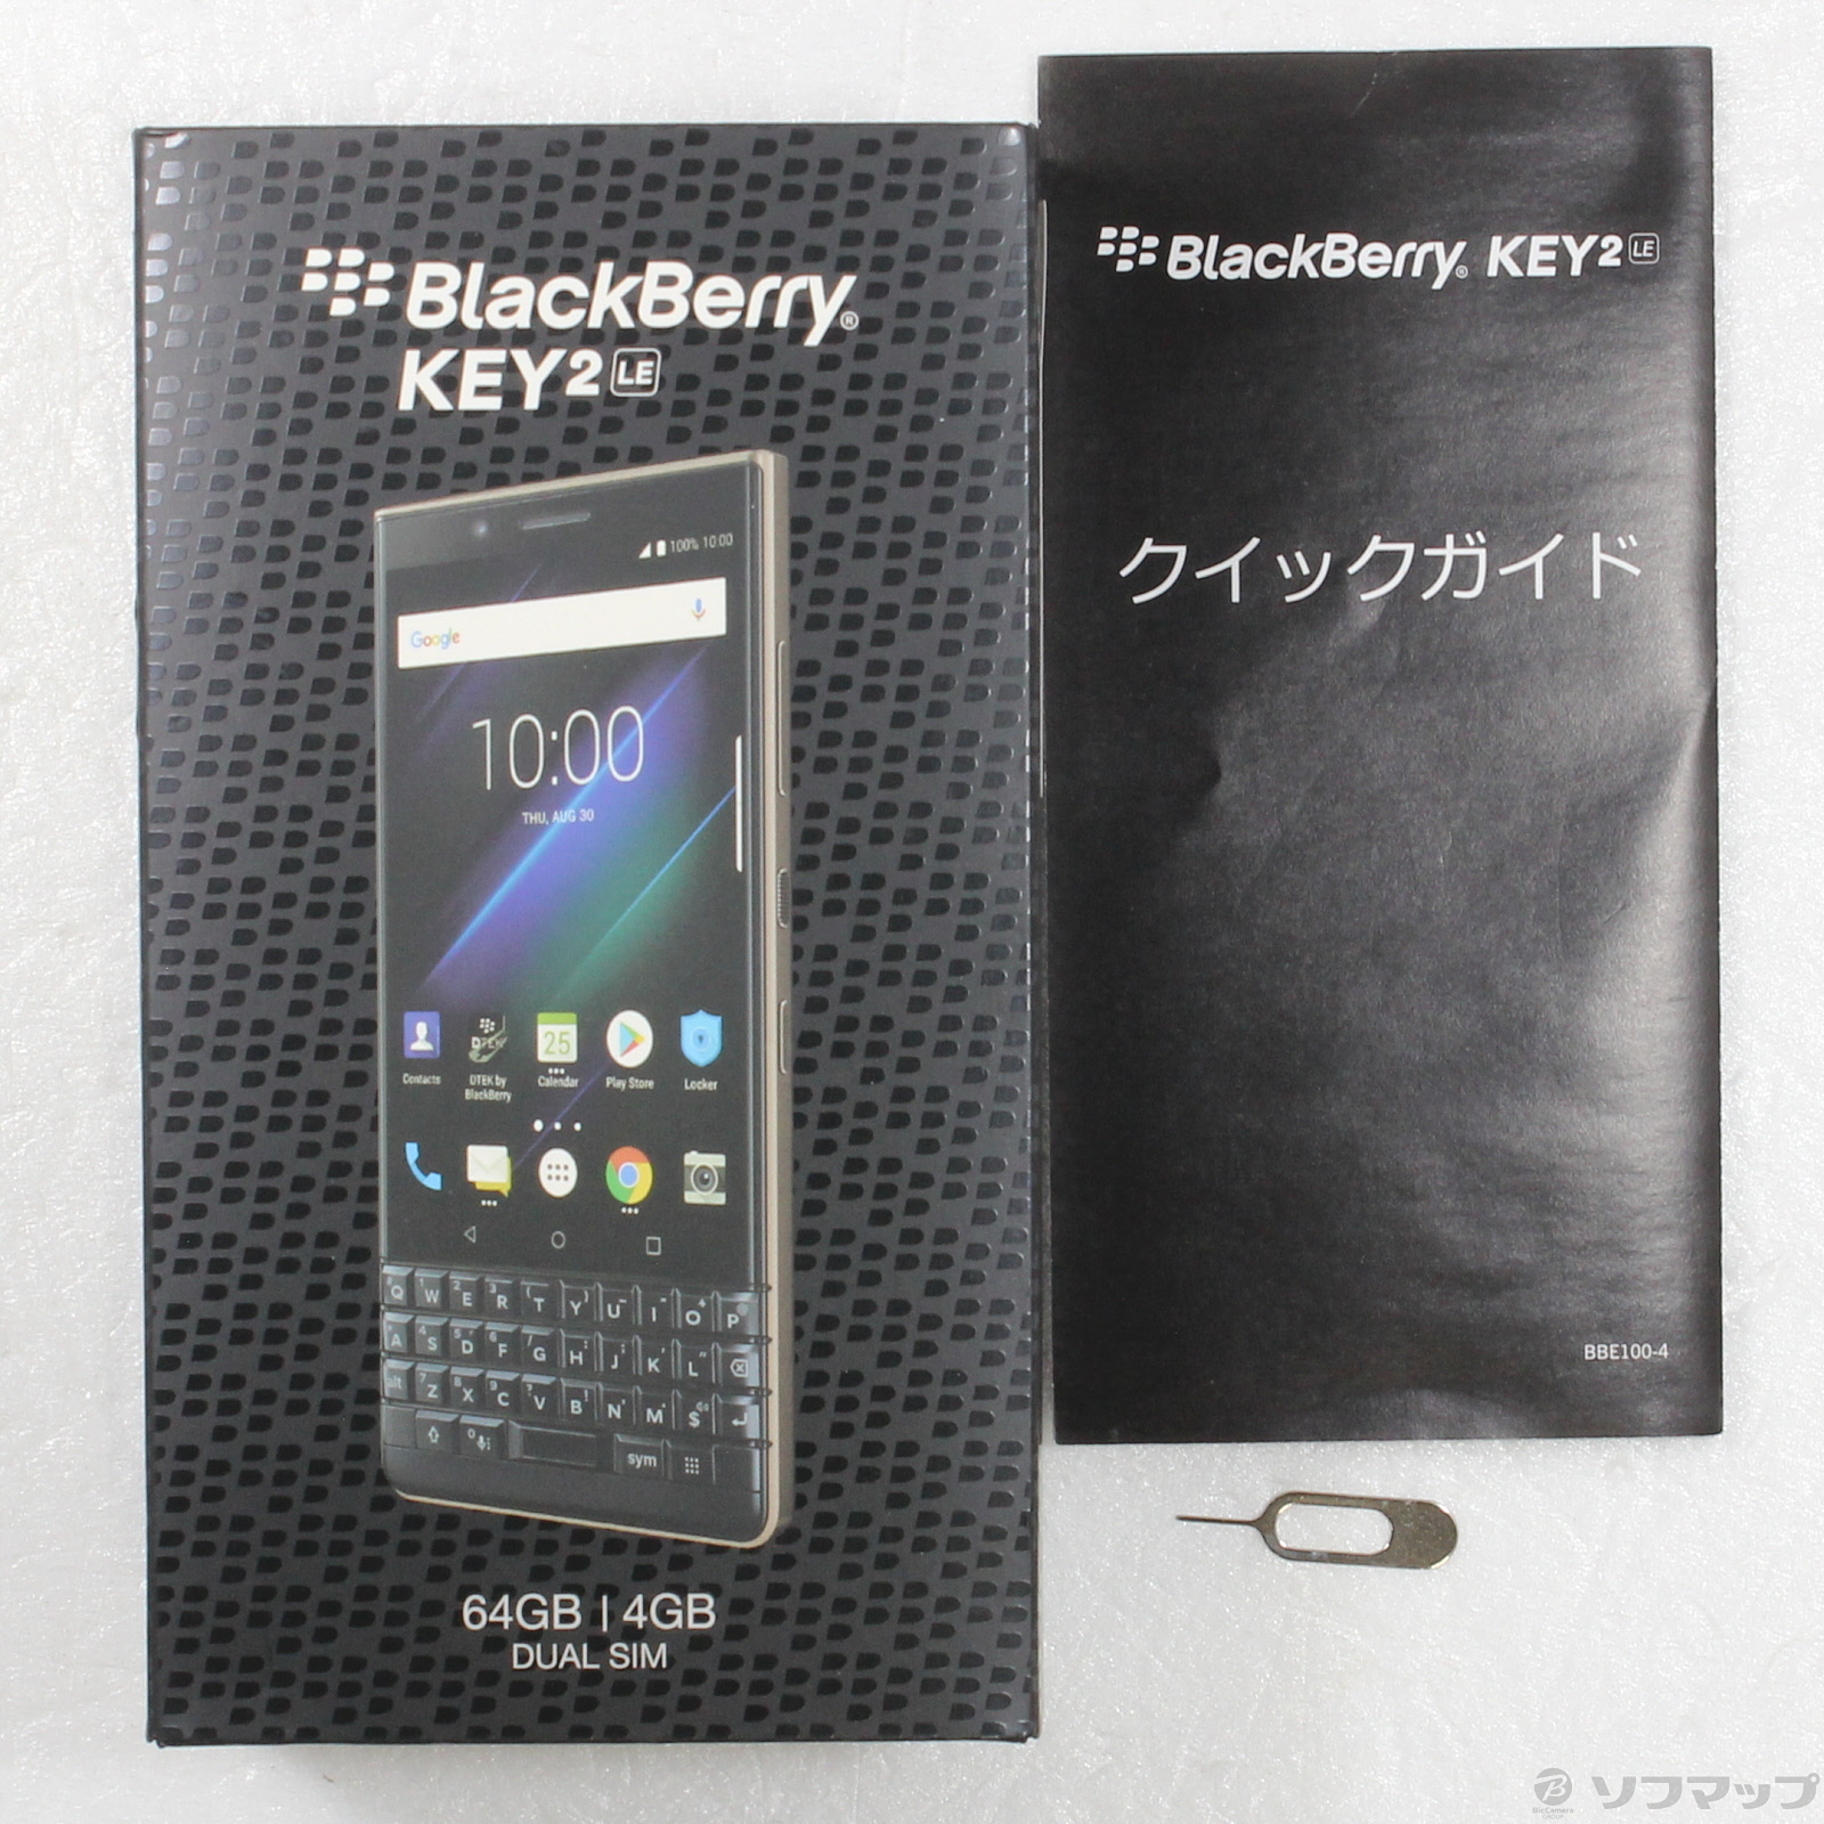 BlackBerry KEY2 SIM FREE